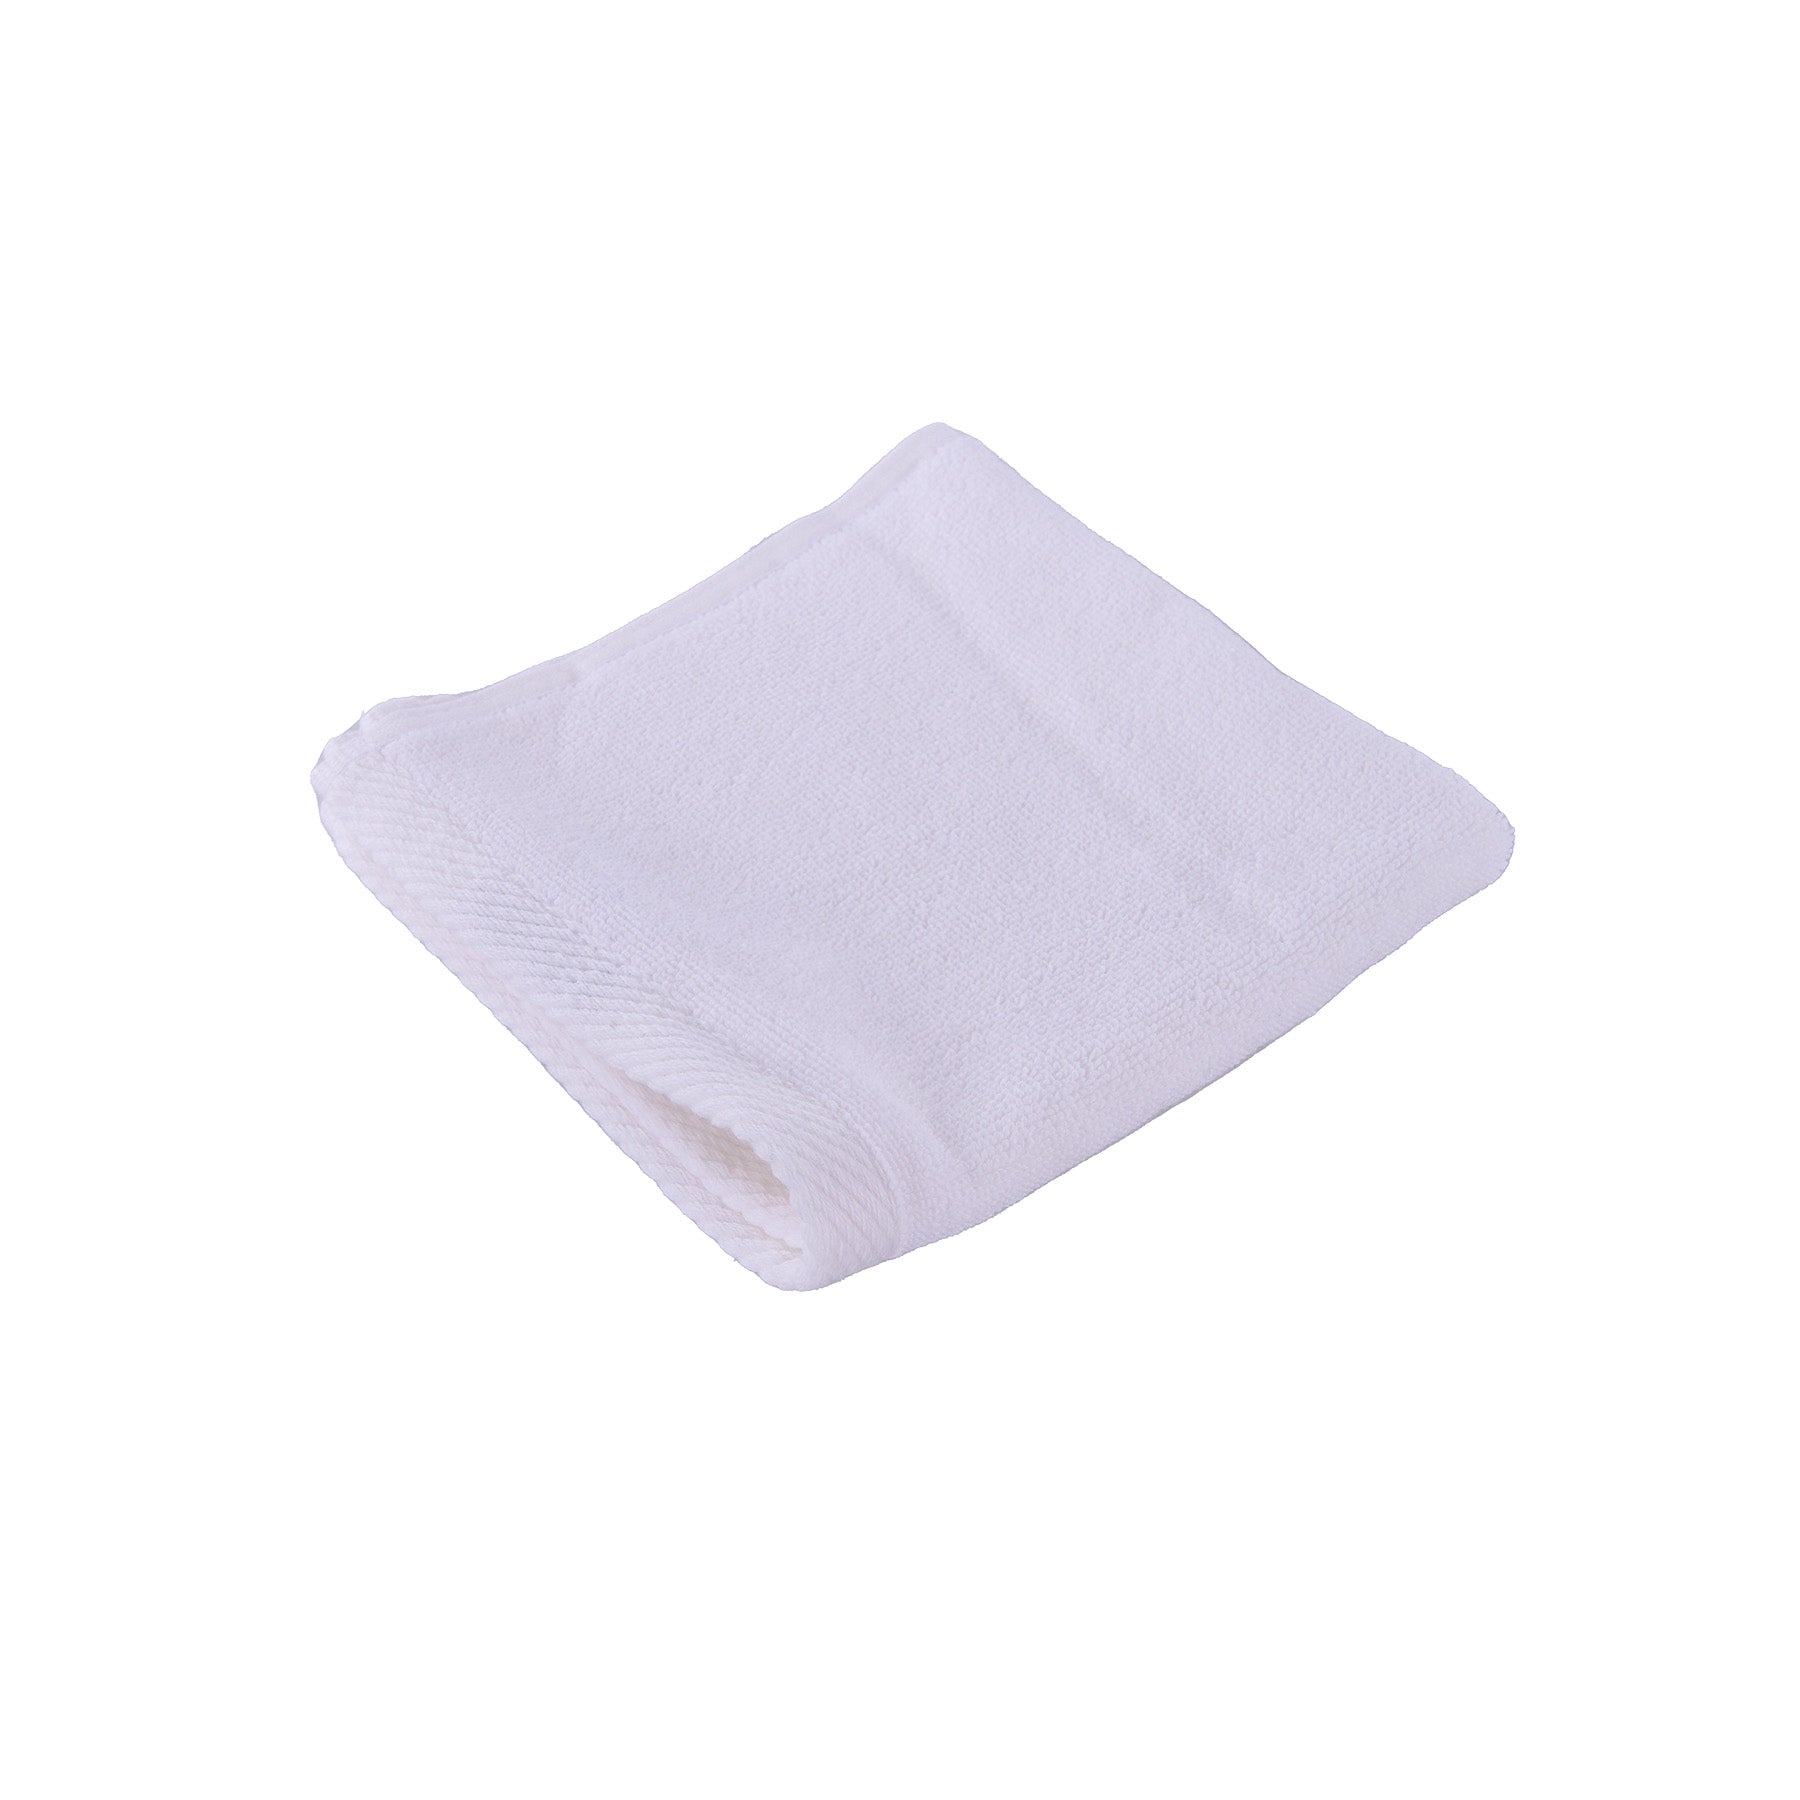 Hand towel - WhiteSize: 33x33cm.